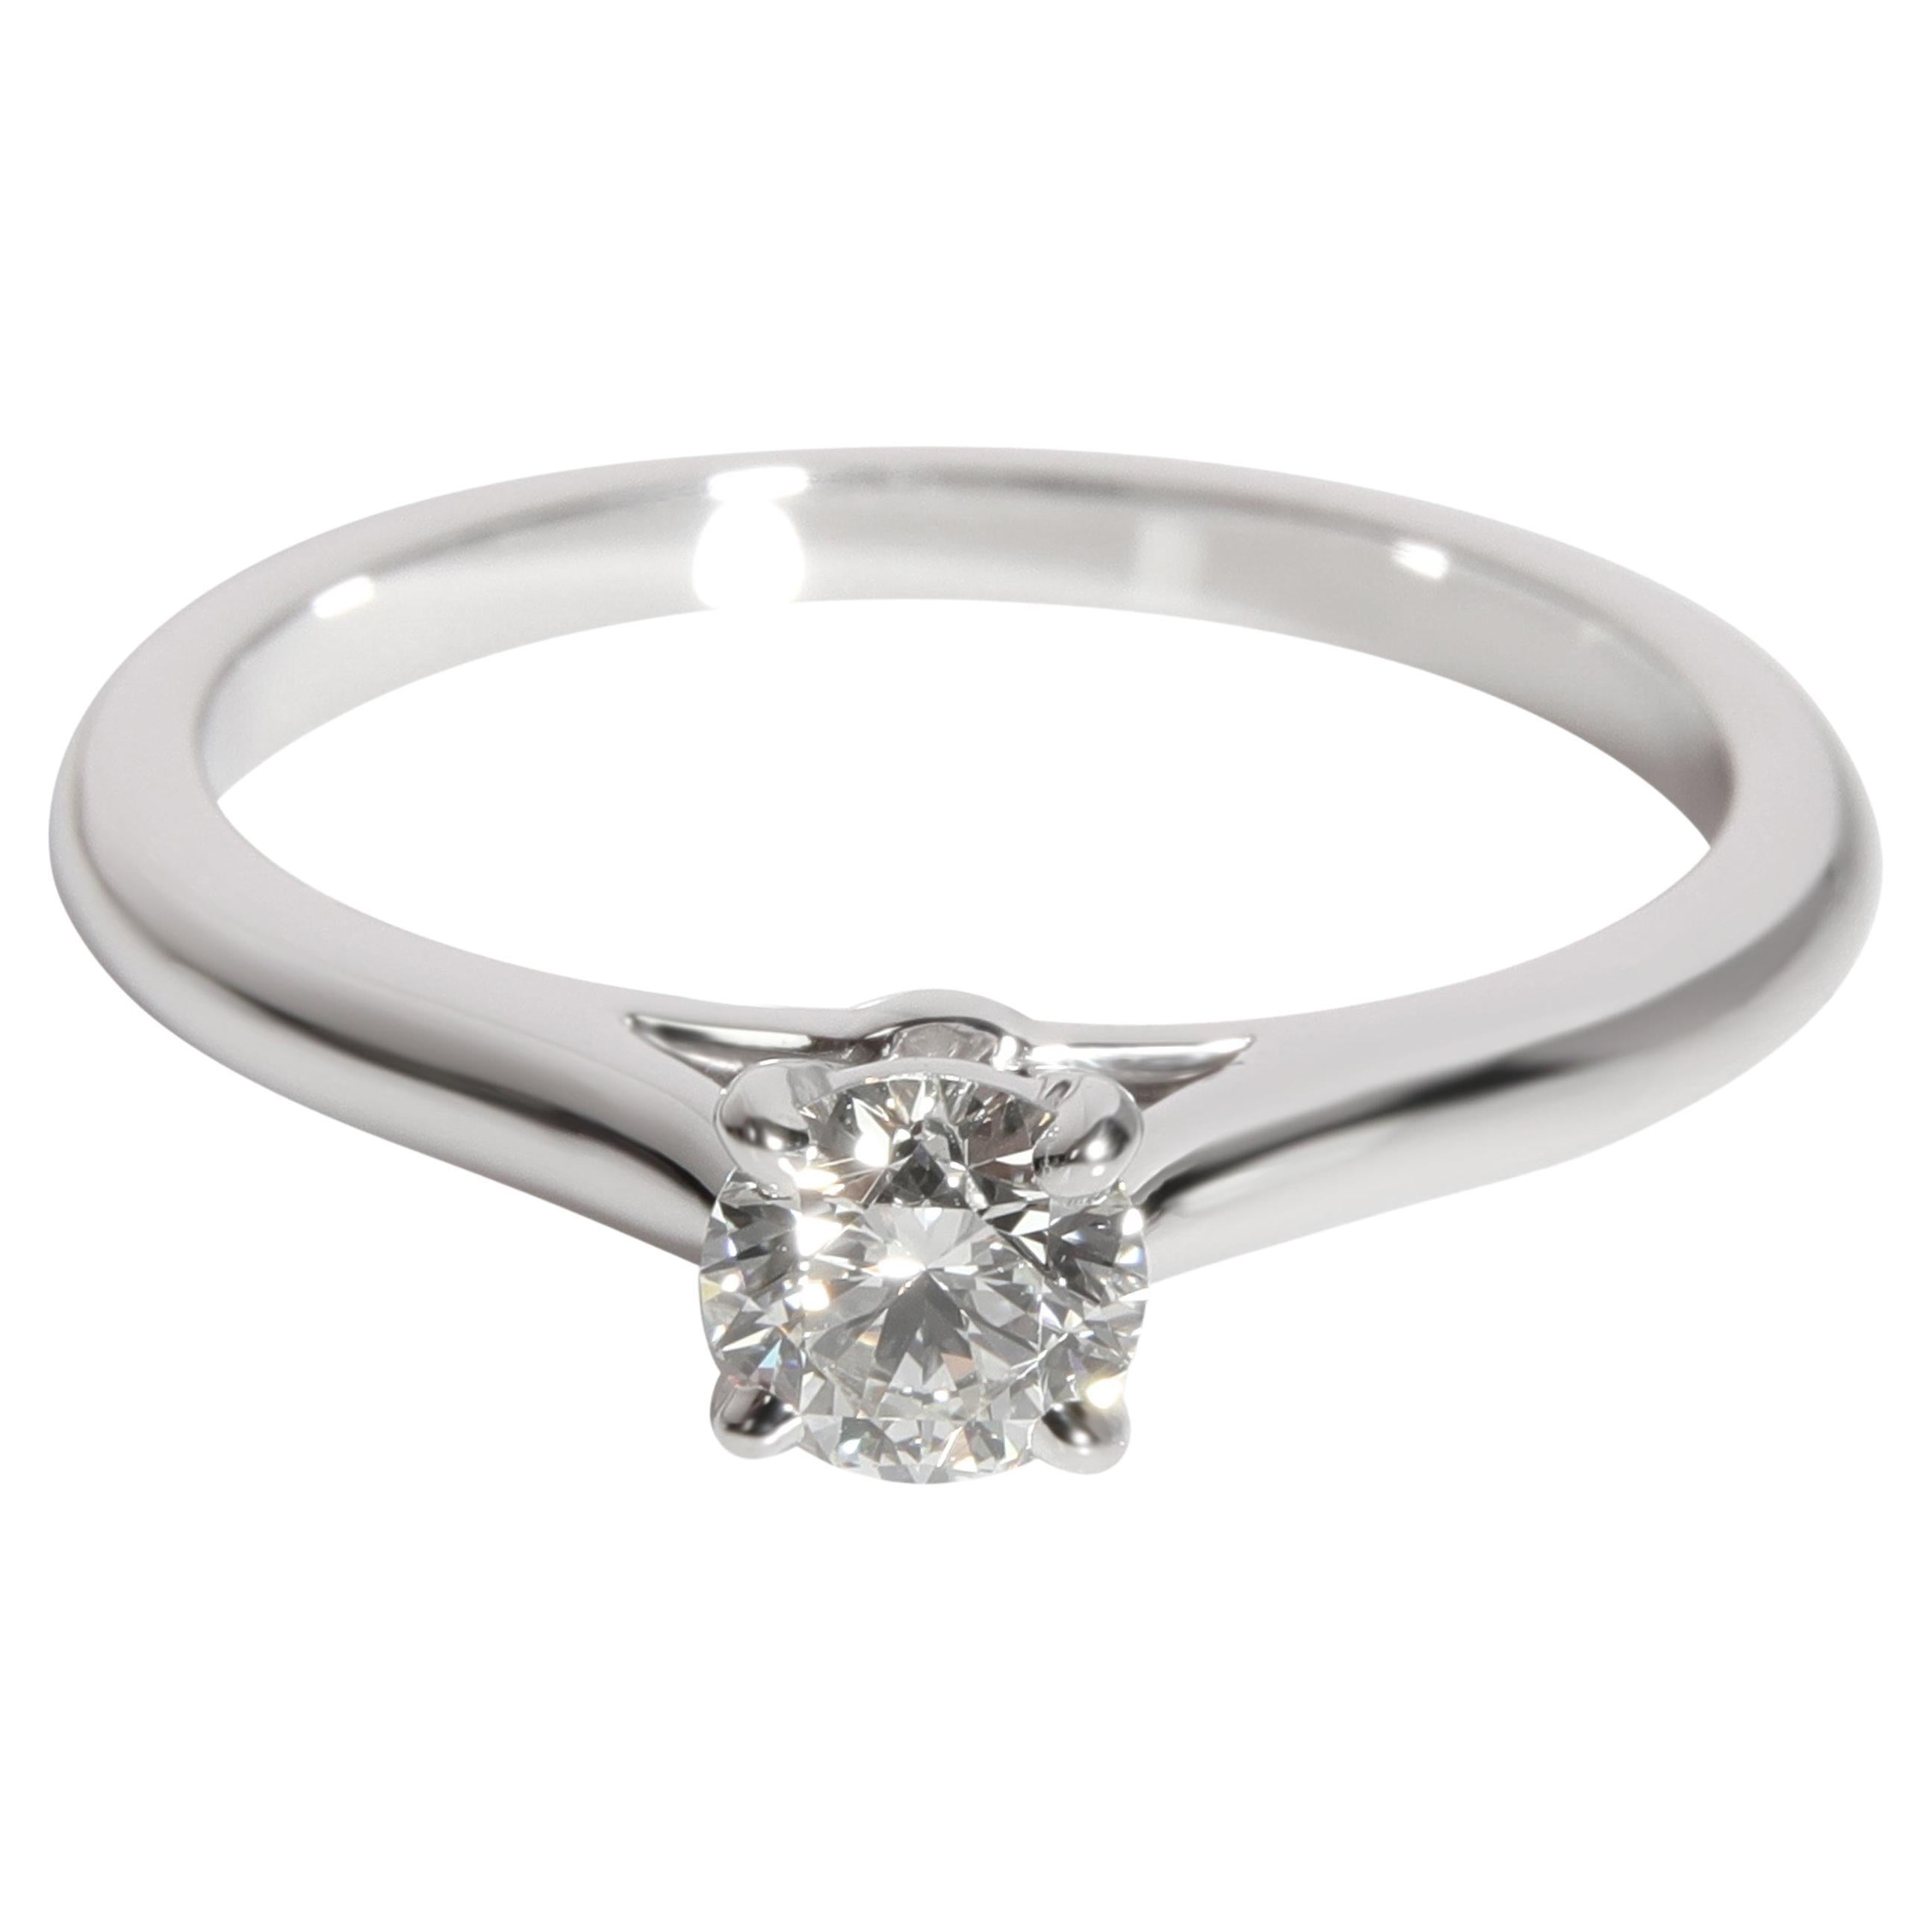 Cartier 1895 Diamond Solitaire Engagement Ring in Platinum H VVS1 0.36 Ct